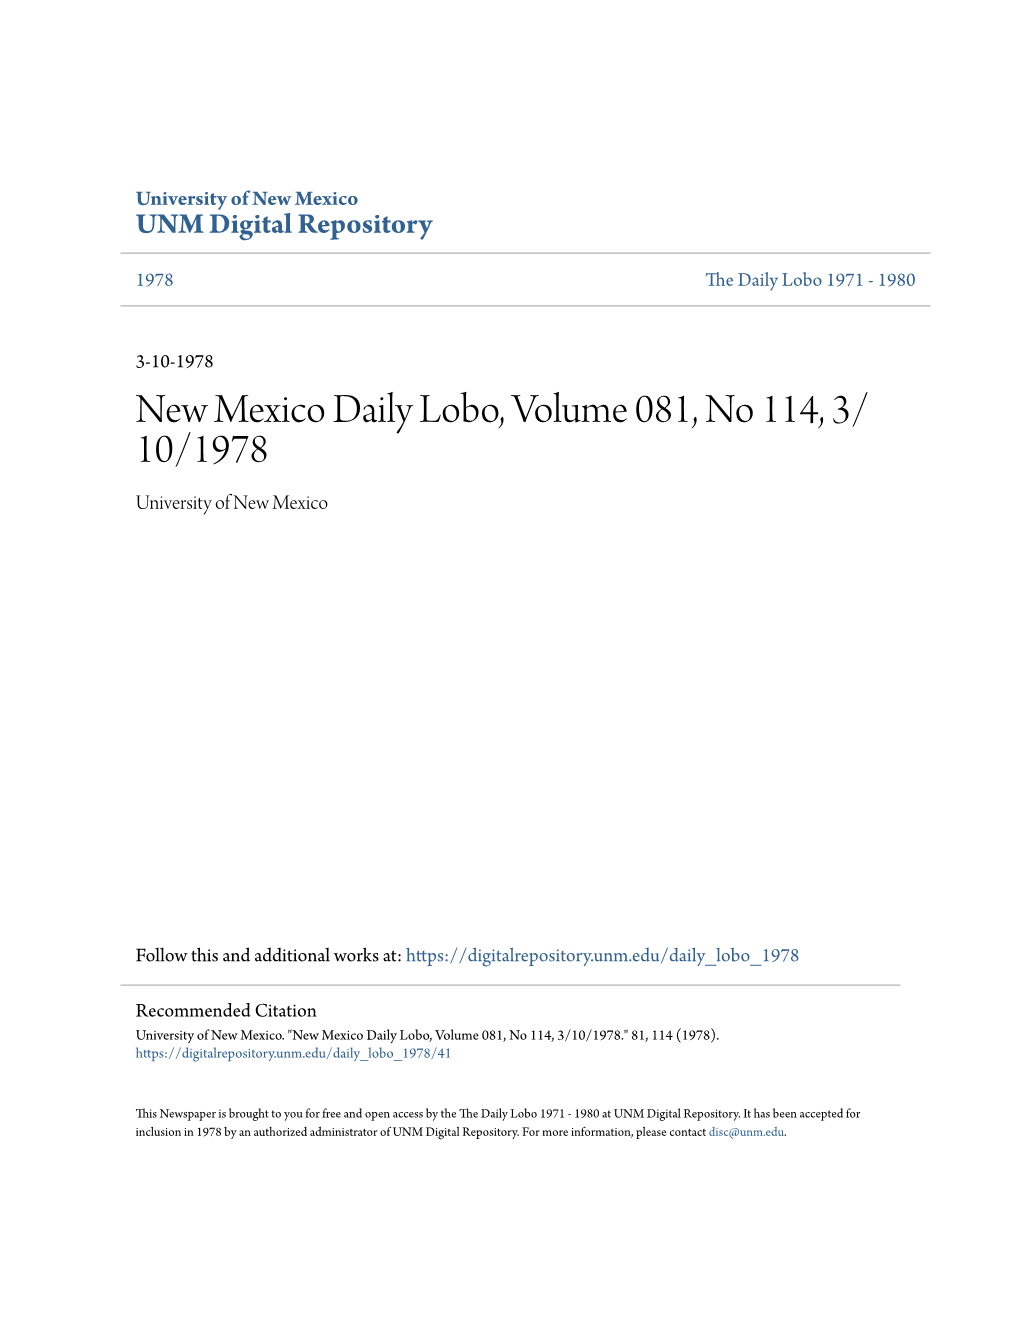 New Mexico Daily Lobo, Volume 081, No 114, 3/10/1978." 81, 114 (1978)